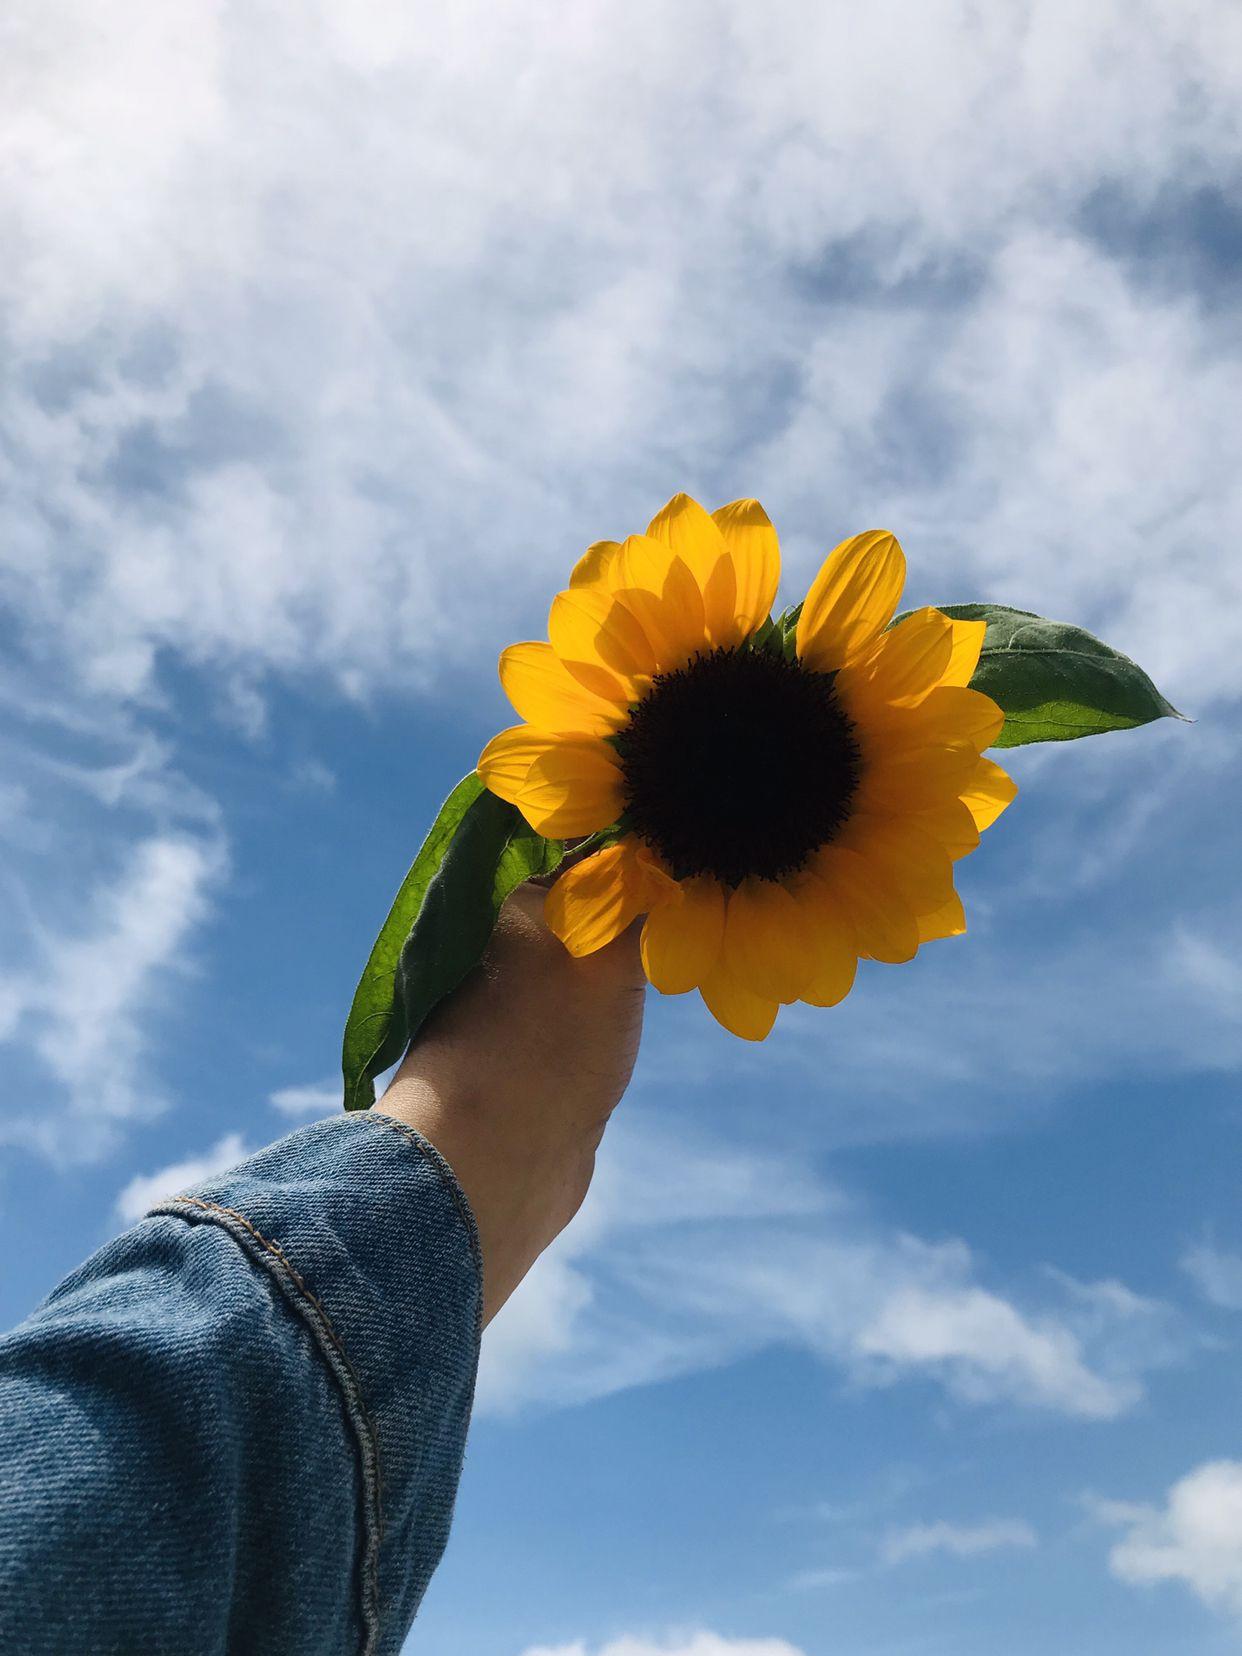 Cute Aesthetic Wallpaper Sunflower